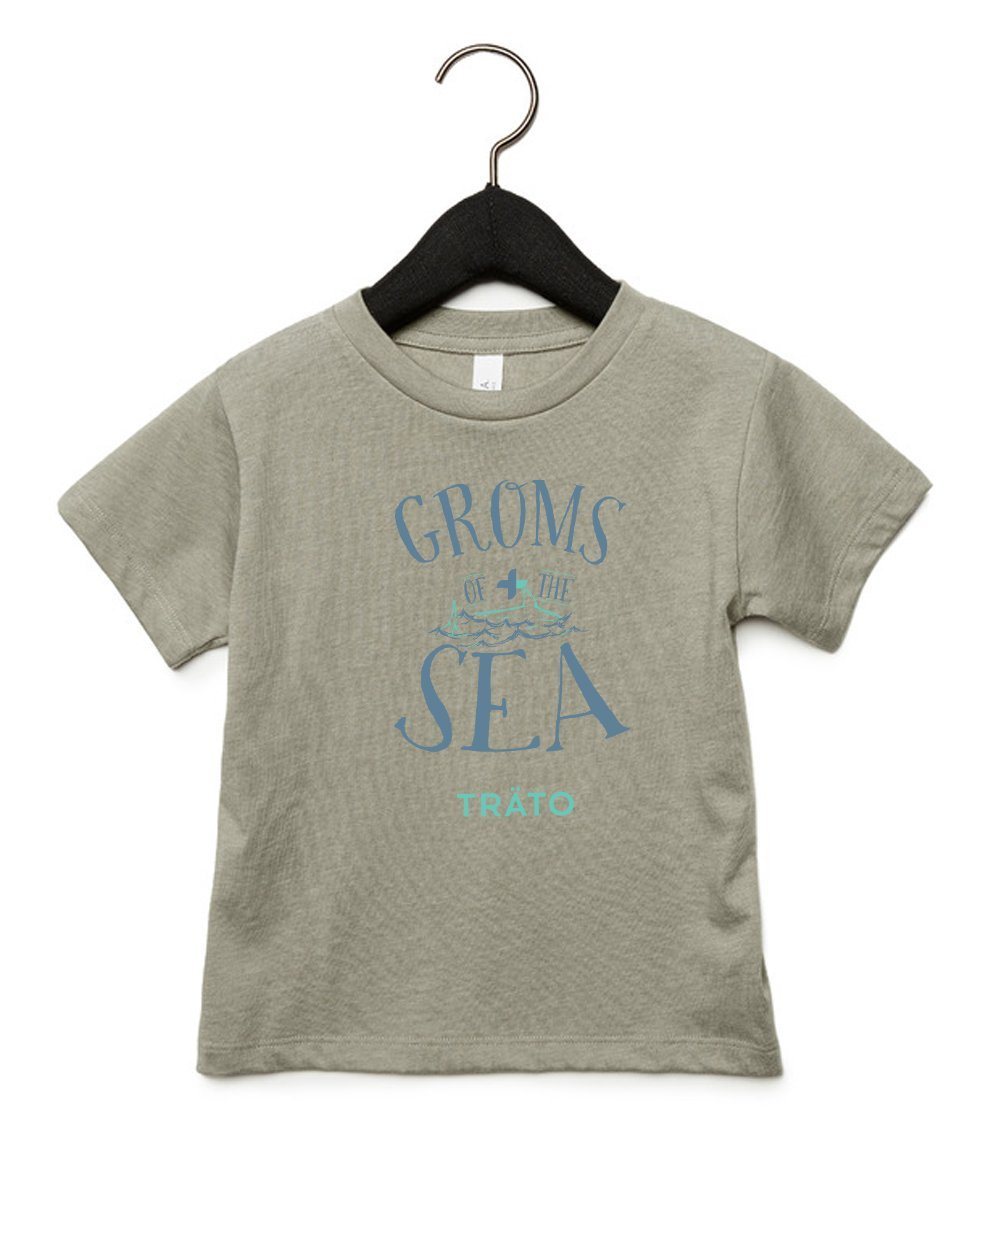 TRÄTO Toddler Groms Jersey T-shirt